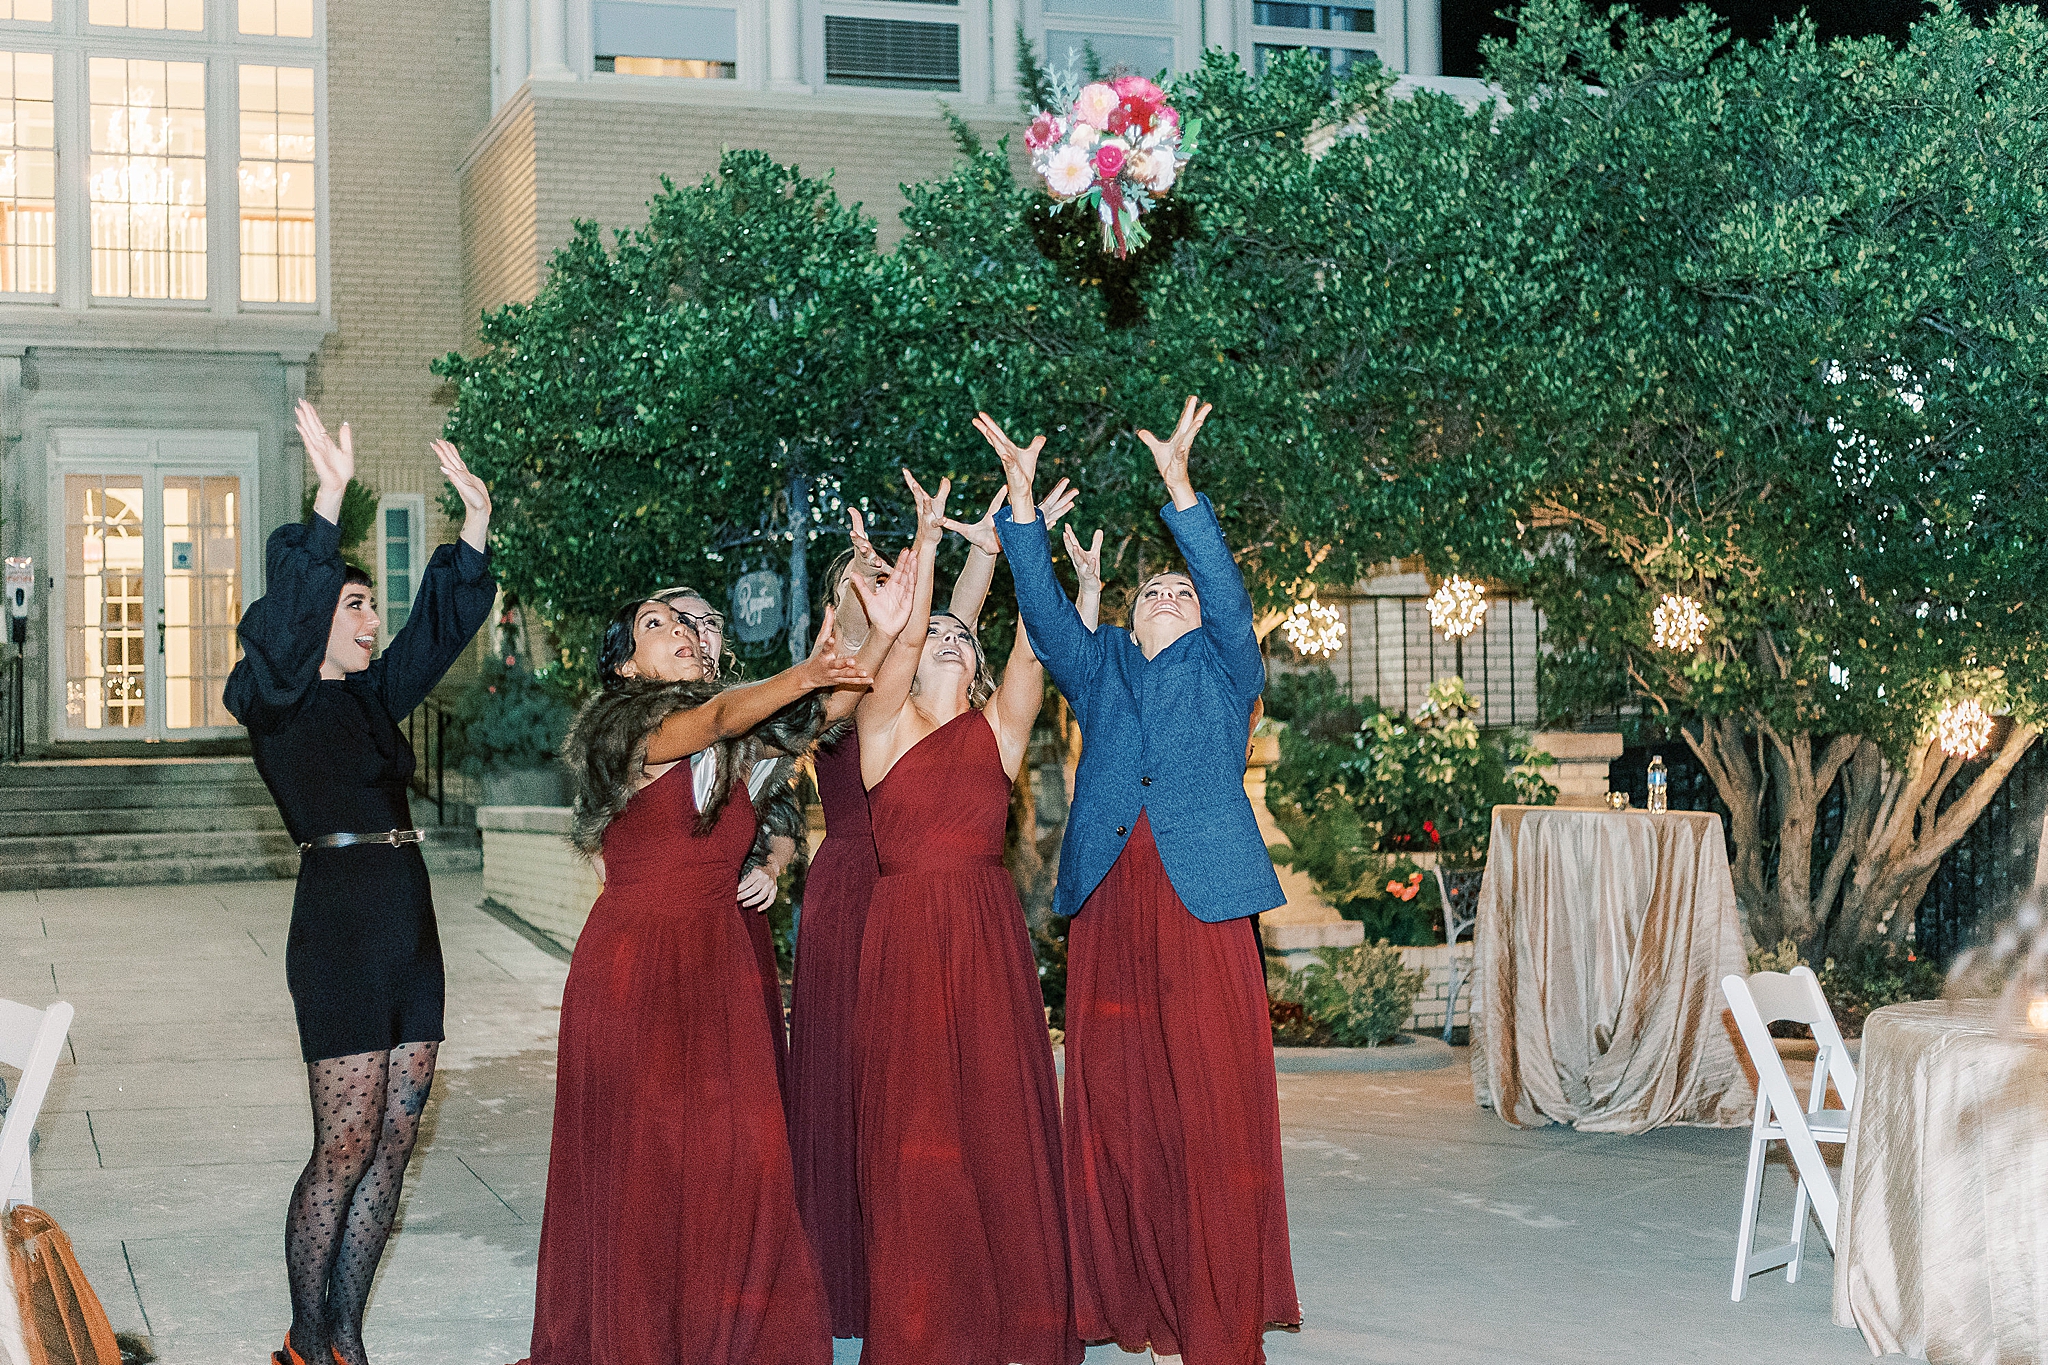 bridesmaids reach for bouquet during toss